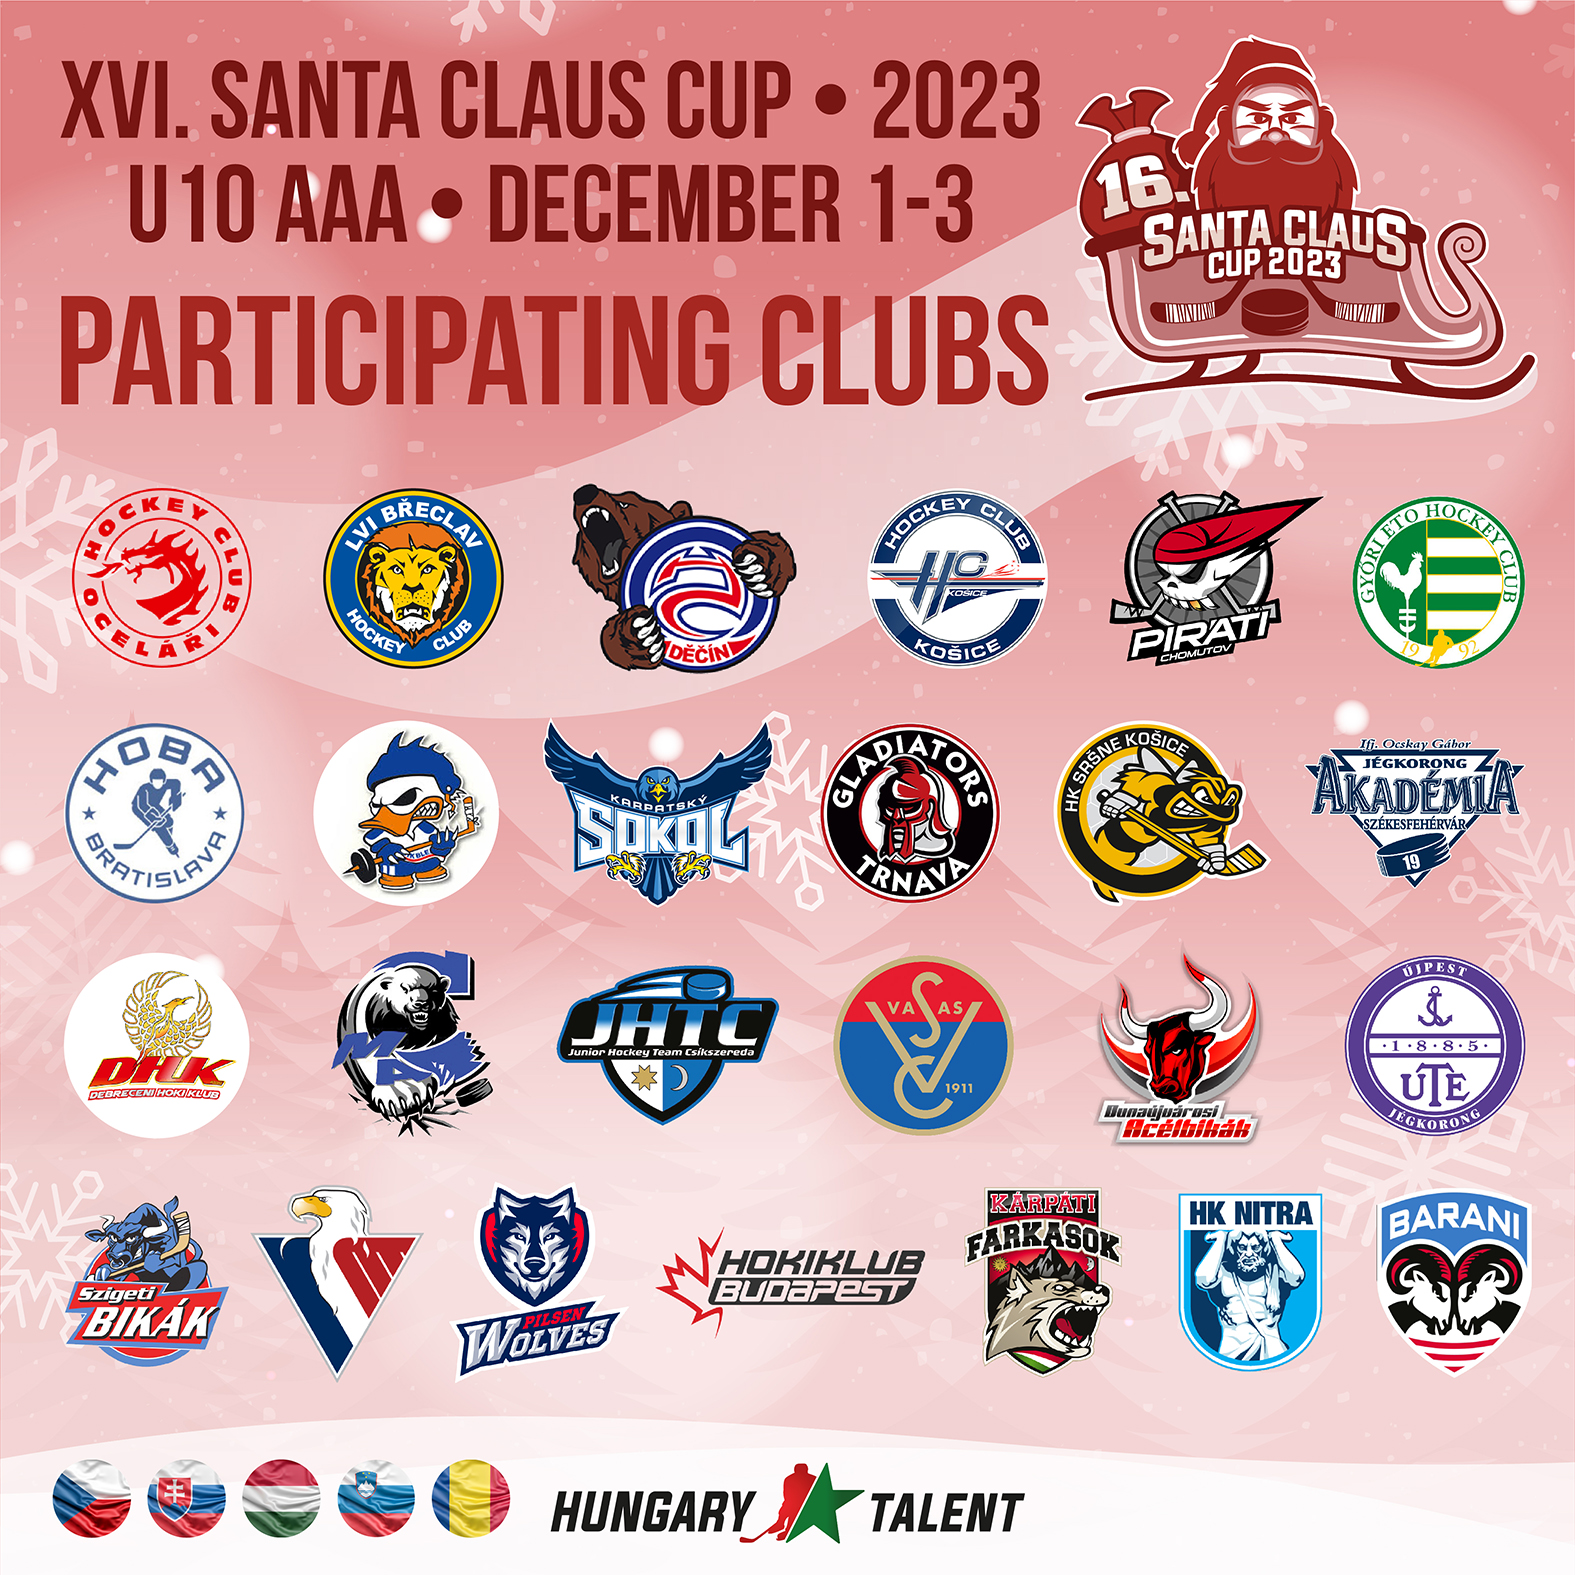 Bemutatjuk a 16. Santa Claus Cup AAA szintjét